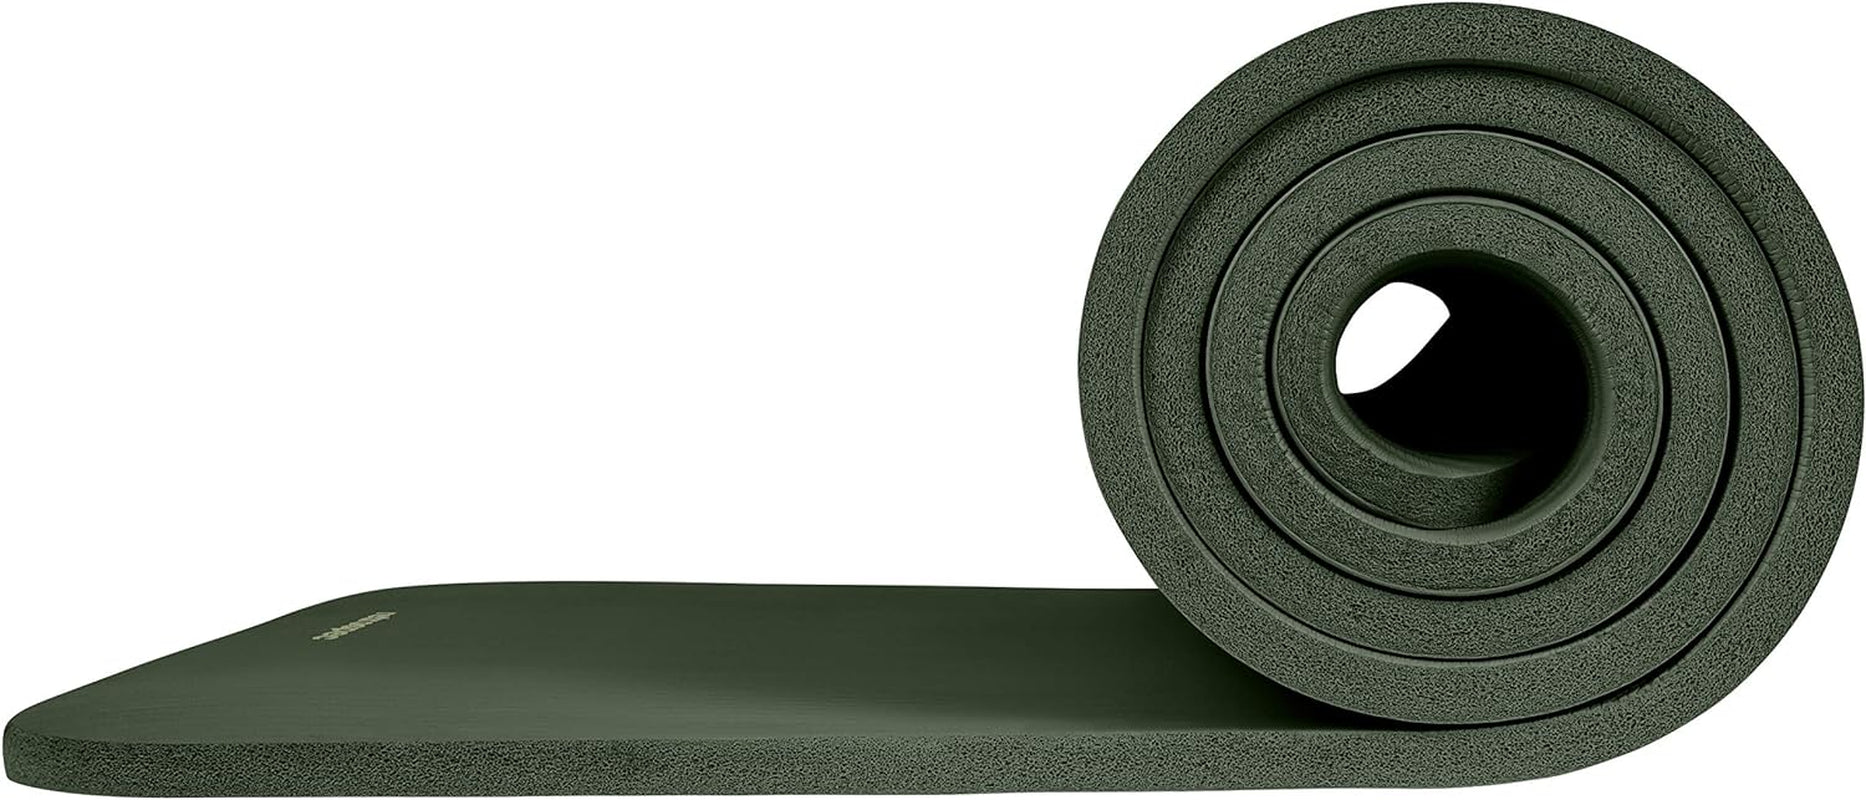 Solana Yoga Mat 1/2" Thick W/Nylon Strap for Men & Women - Non Slip Excercise Mat for Yoga, Pilates, Stretching, Floor & Fitness Workouts, Black